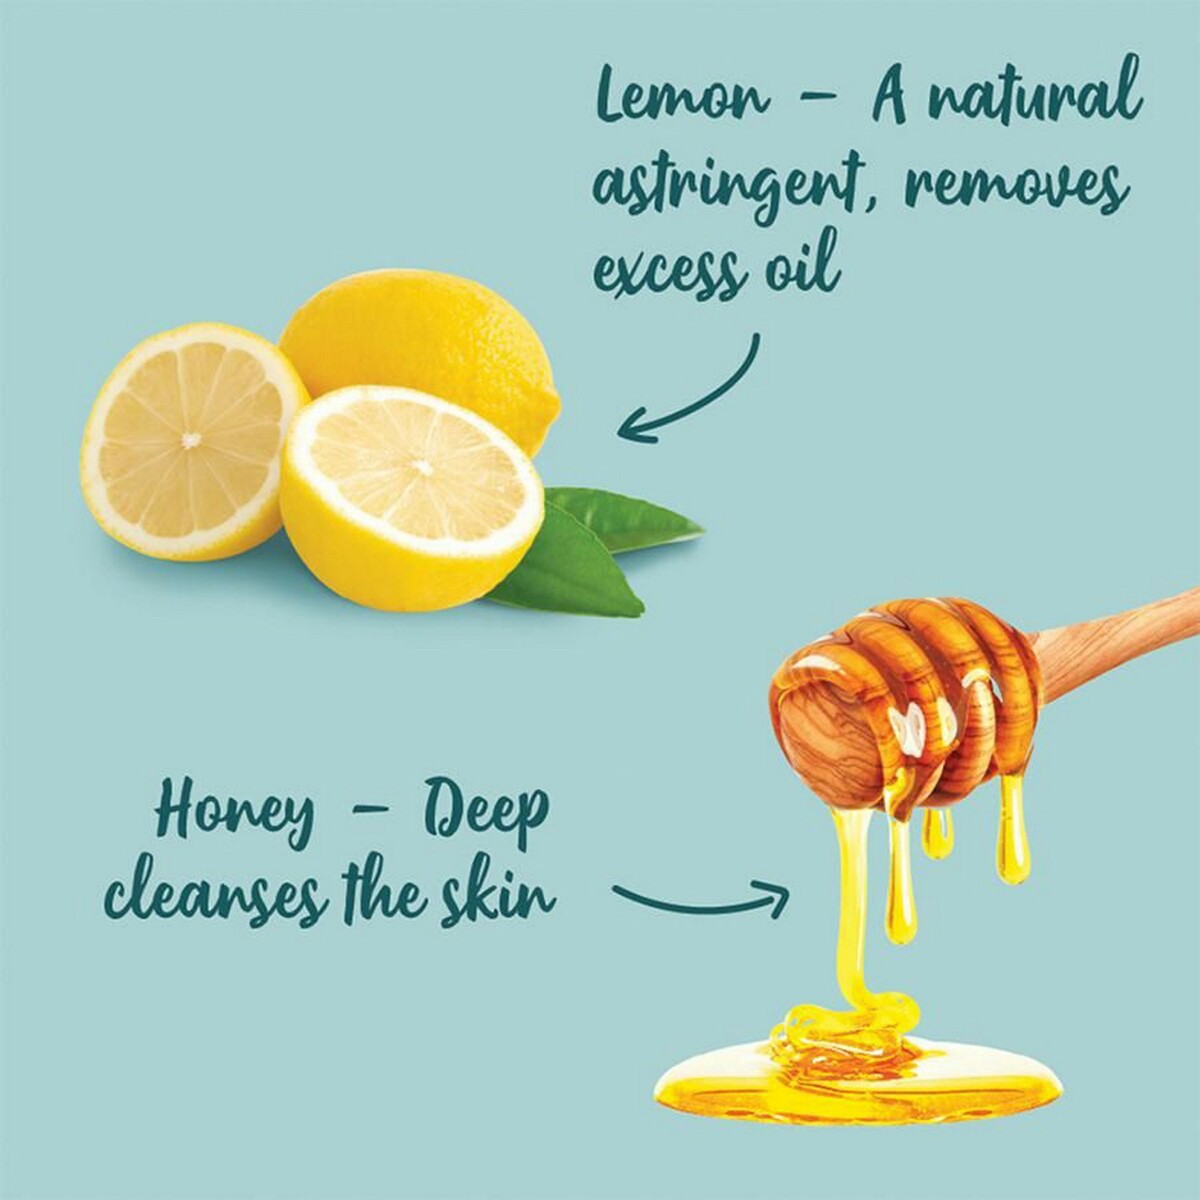 Himalaya Face Wash Gel Oil Clear Lemon 100ml